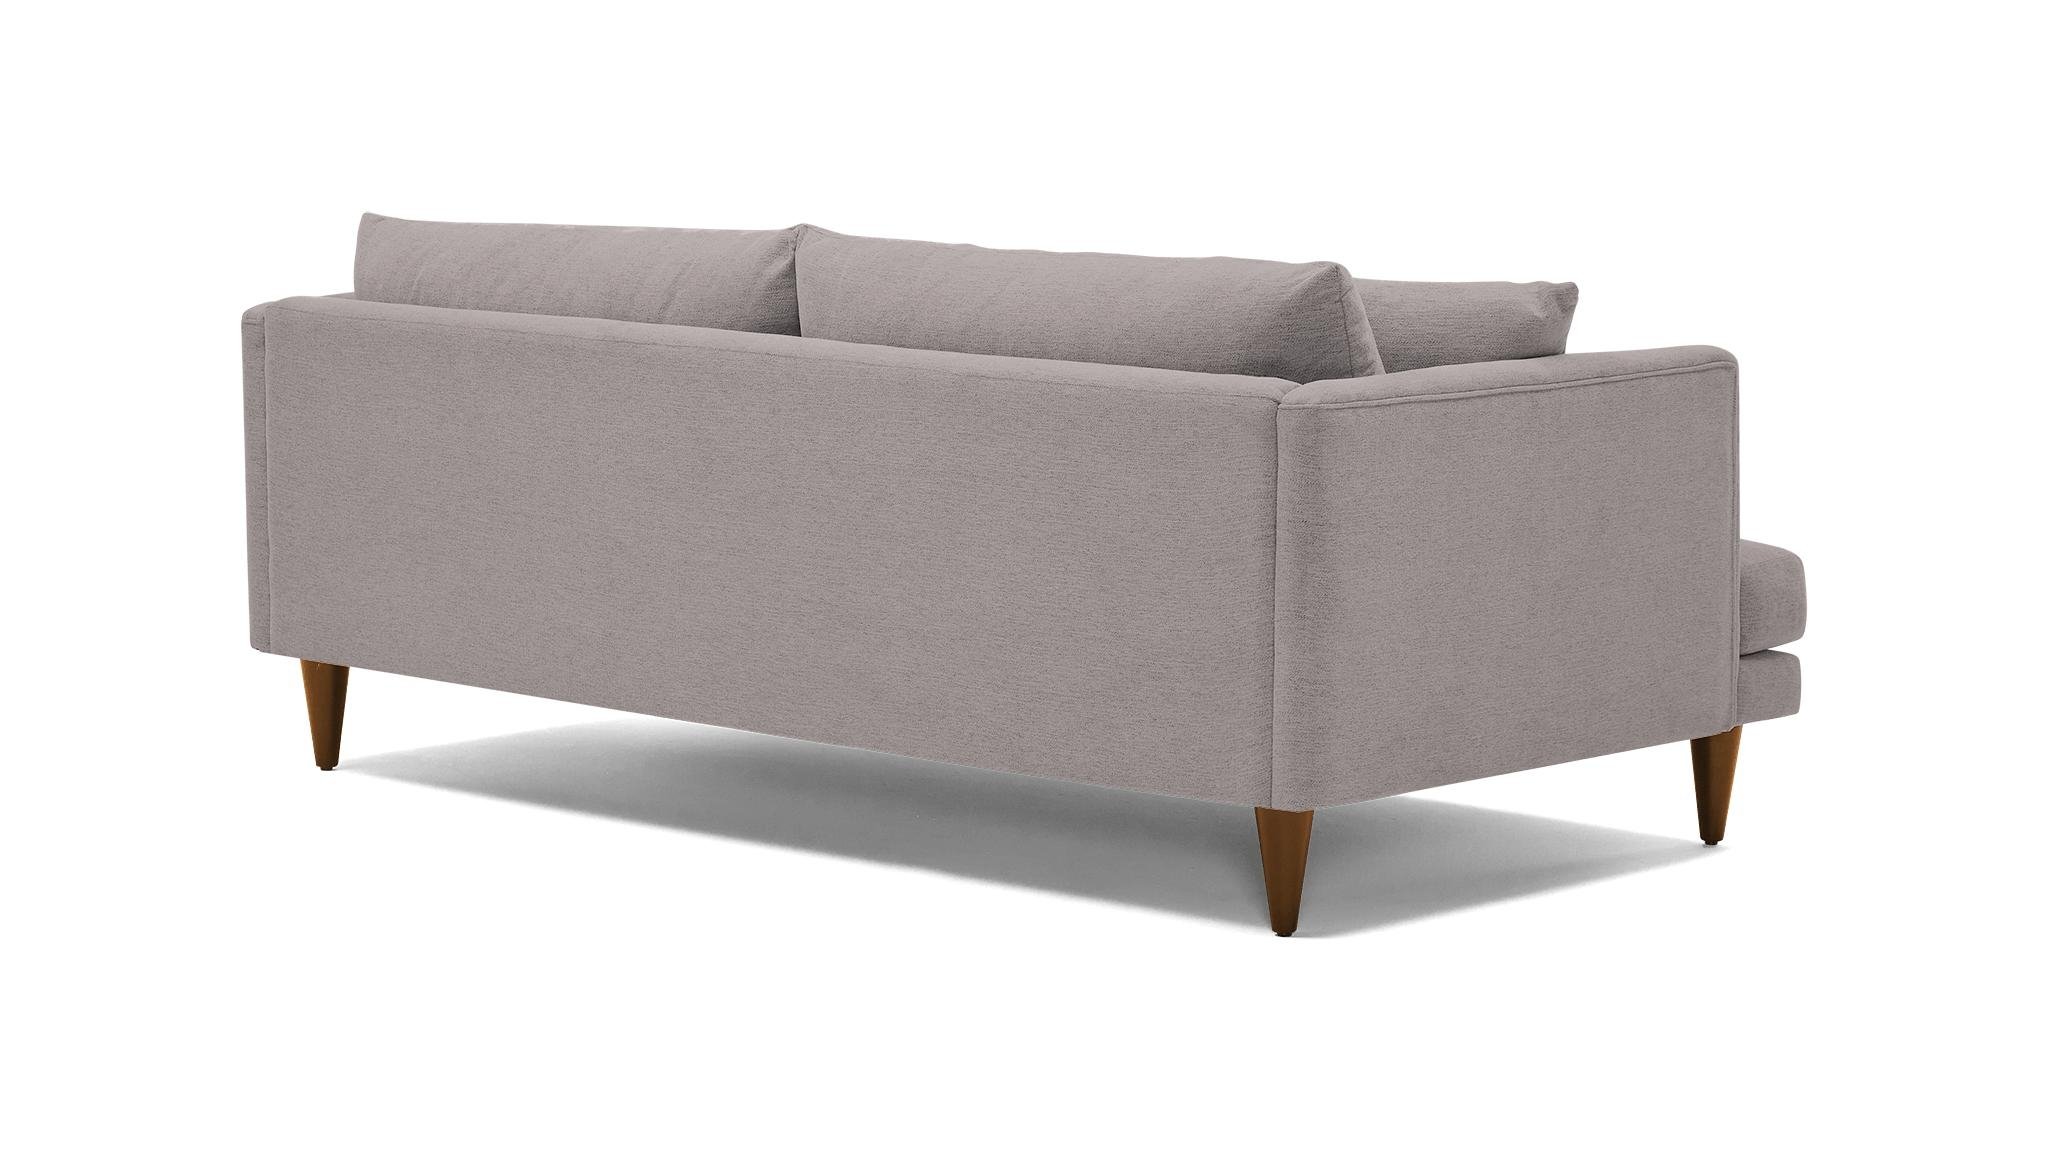 Lewis Mid Century Modern Sofa - Sunbrella Premier Wisteria - Mocha - Cone - Image 3